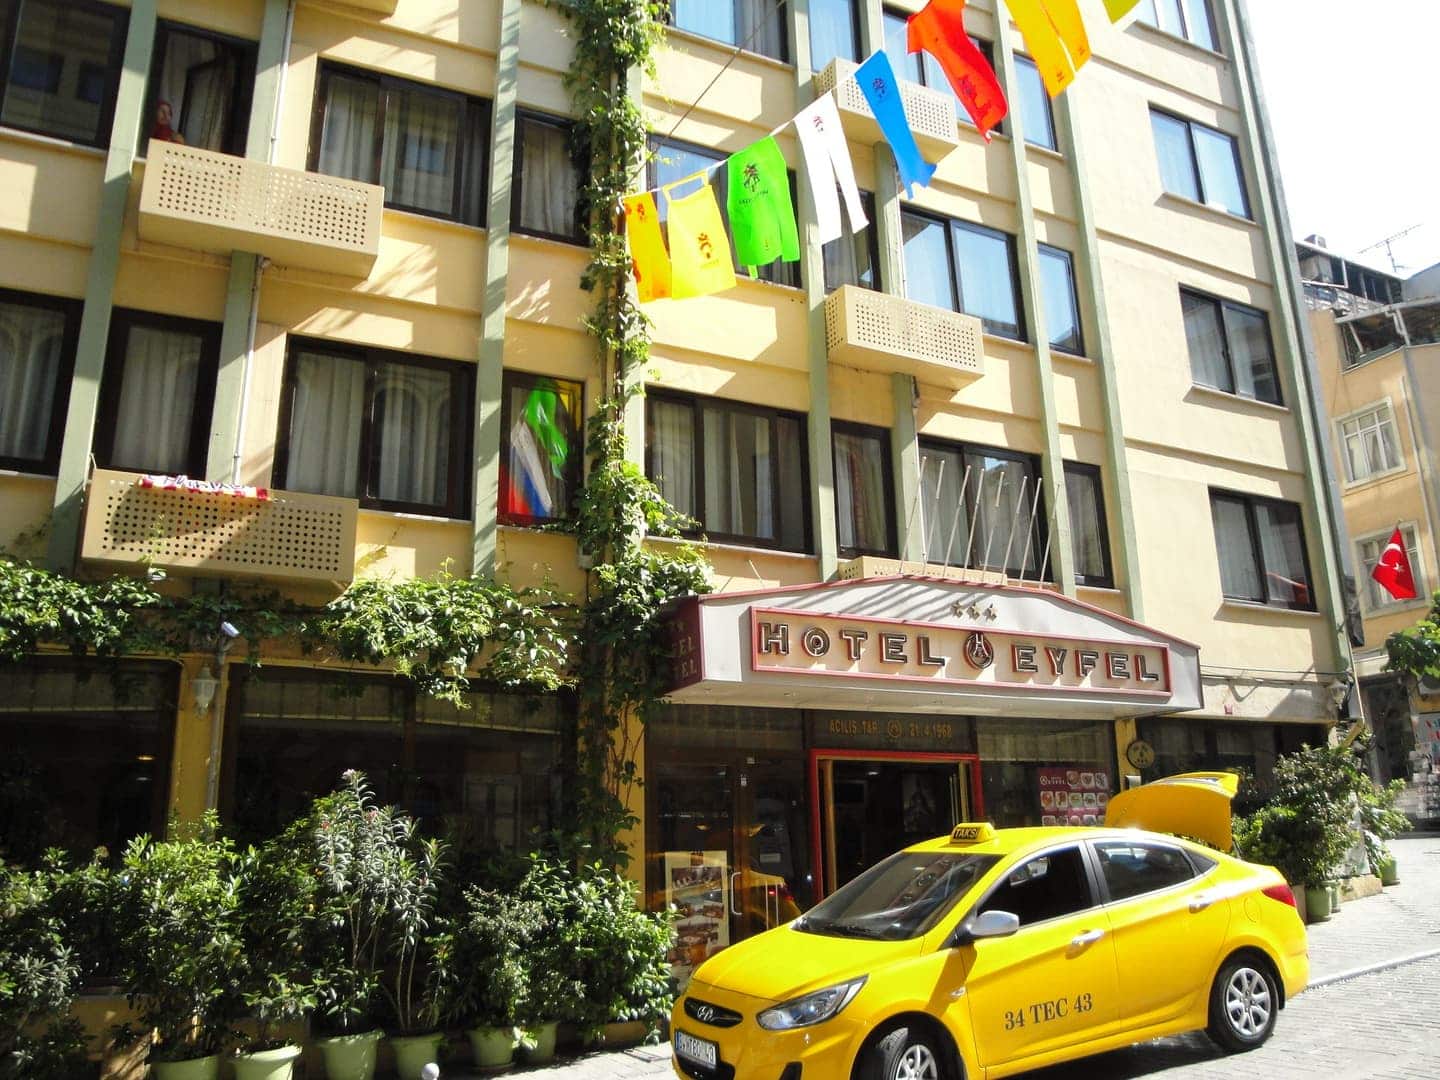 Hotel - Eyfel - Istanbul - studietur - AlfA Travel - facade